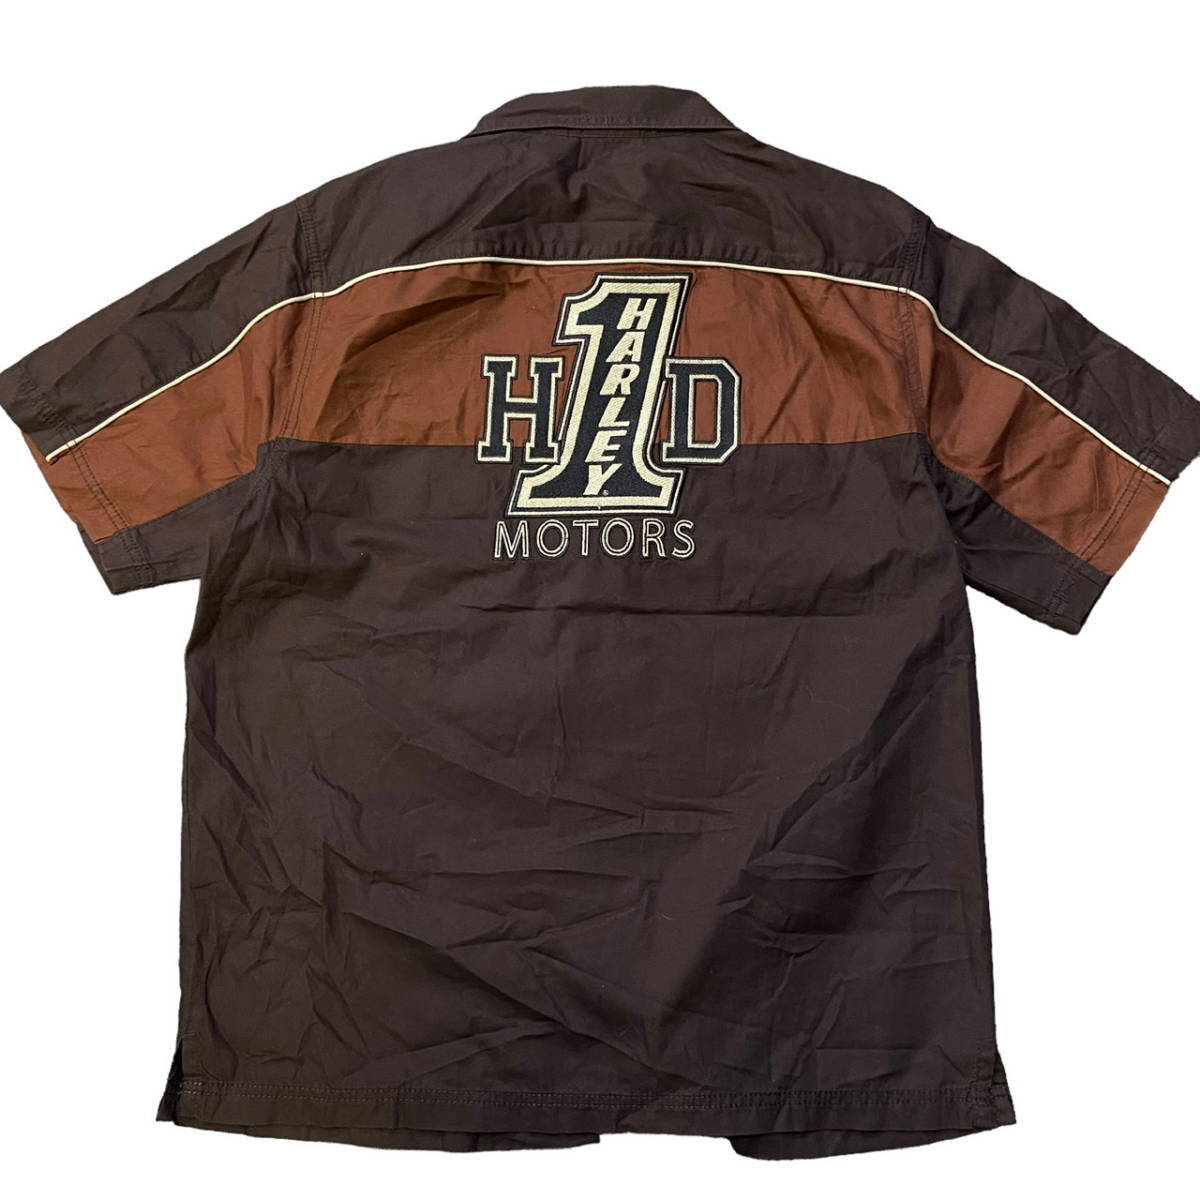 Harley Davidson ハーレーダビッドソン オープンカラーシャツ M ブラウン 半袖 開襟 ロゴ 刺繍 ボタンシャツ MOTORS モーターサイクル_画像2